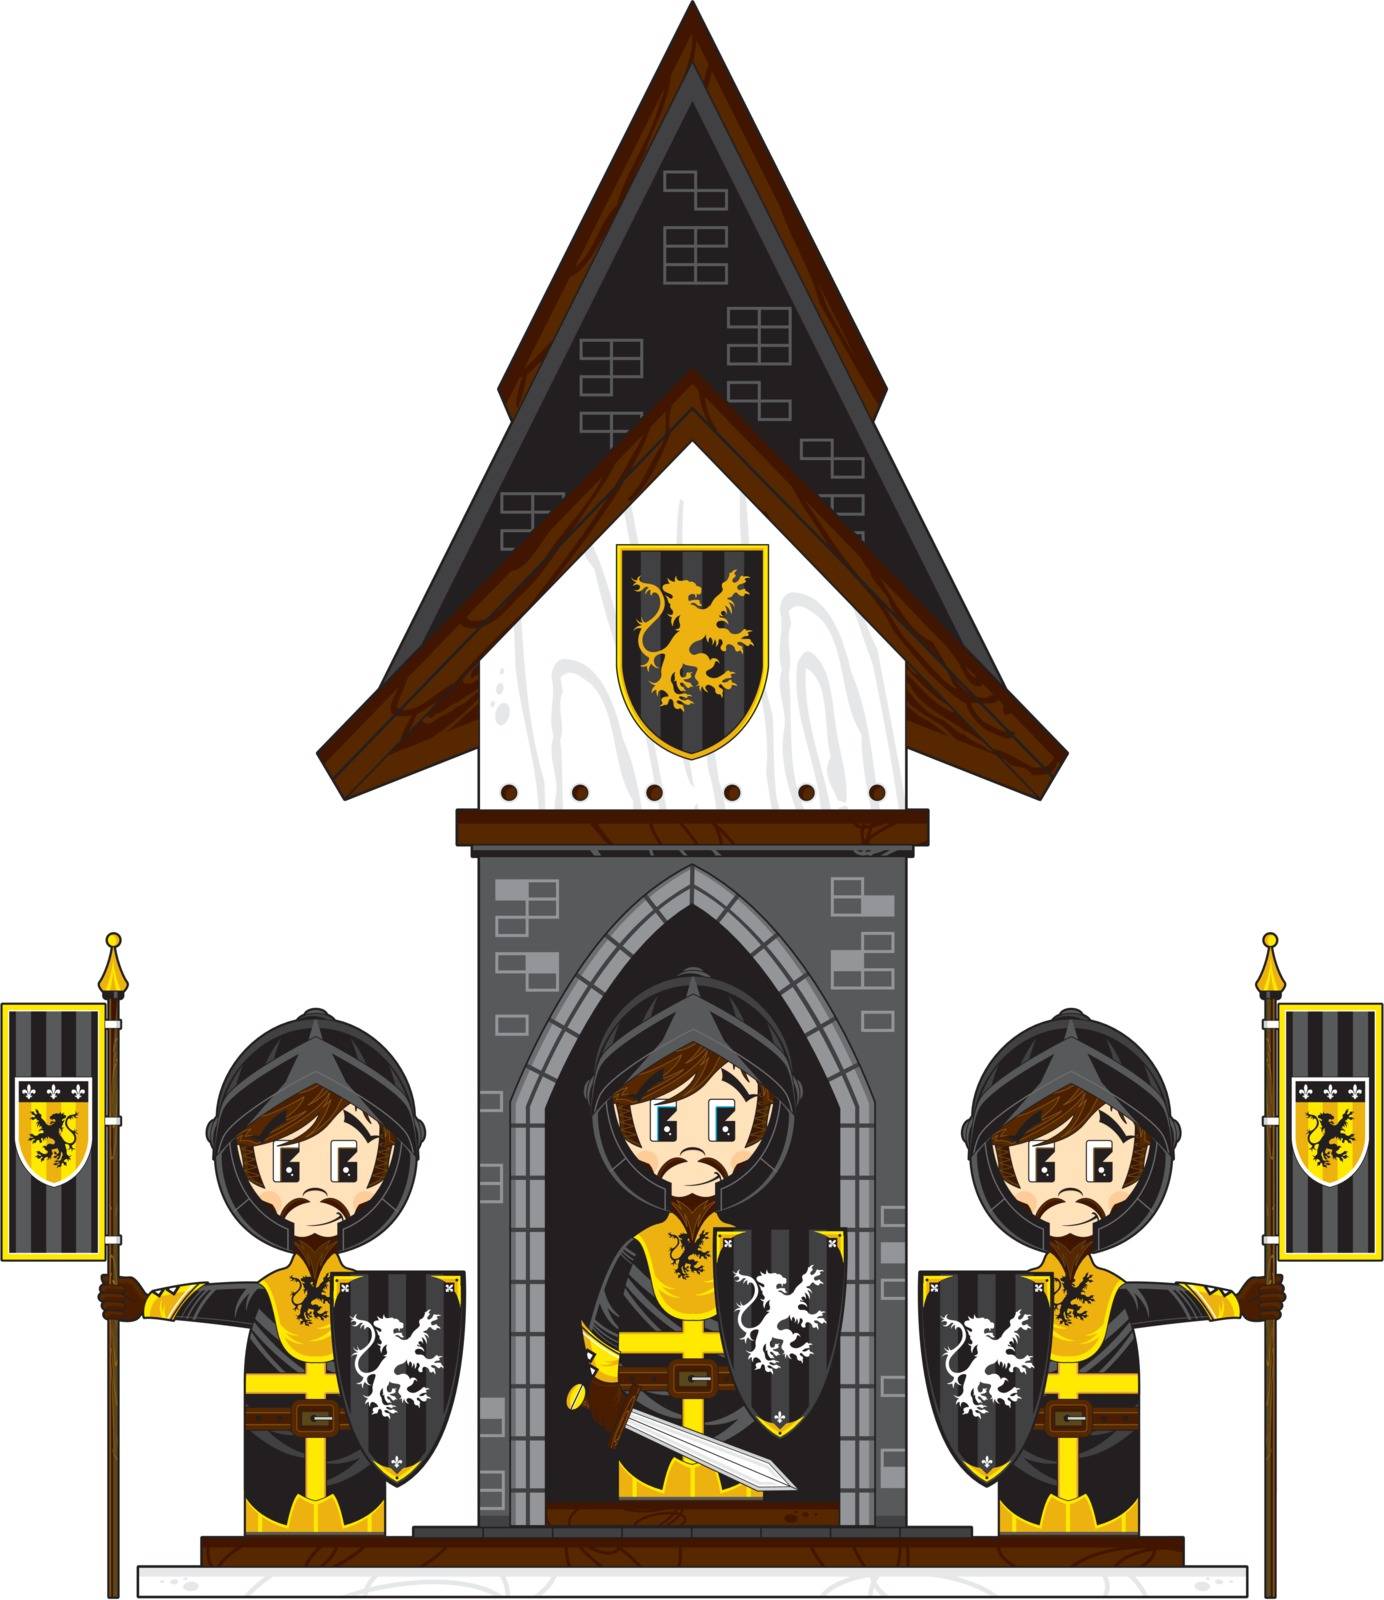 Cute Medieval Knights on Guard by markmurphycreative